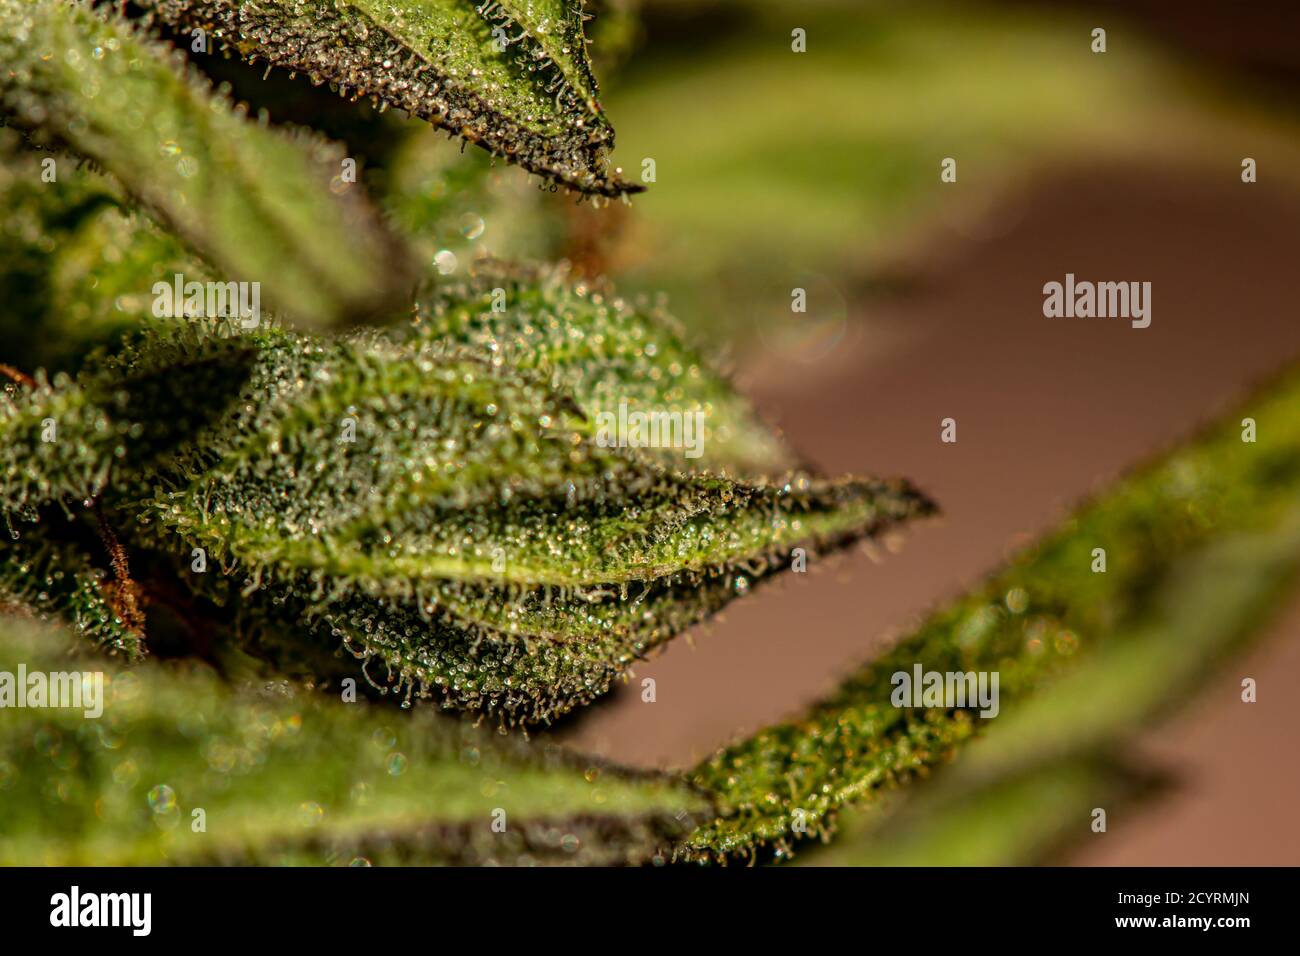 Crystals on cannabis leaf Stock Photo